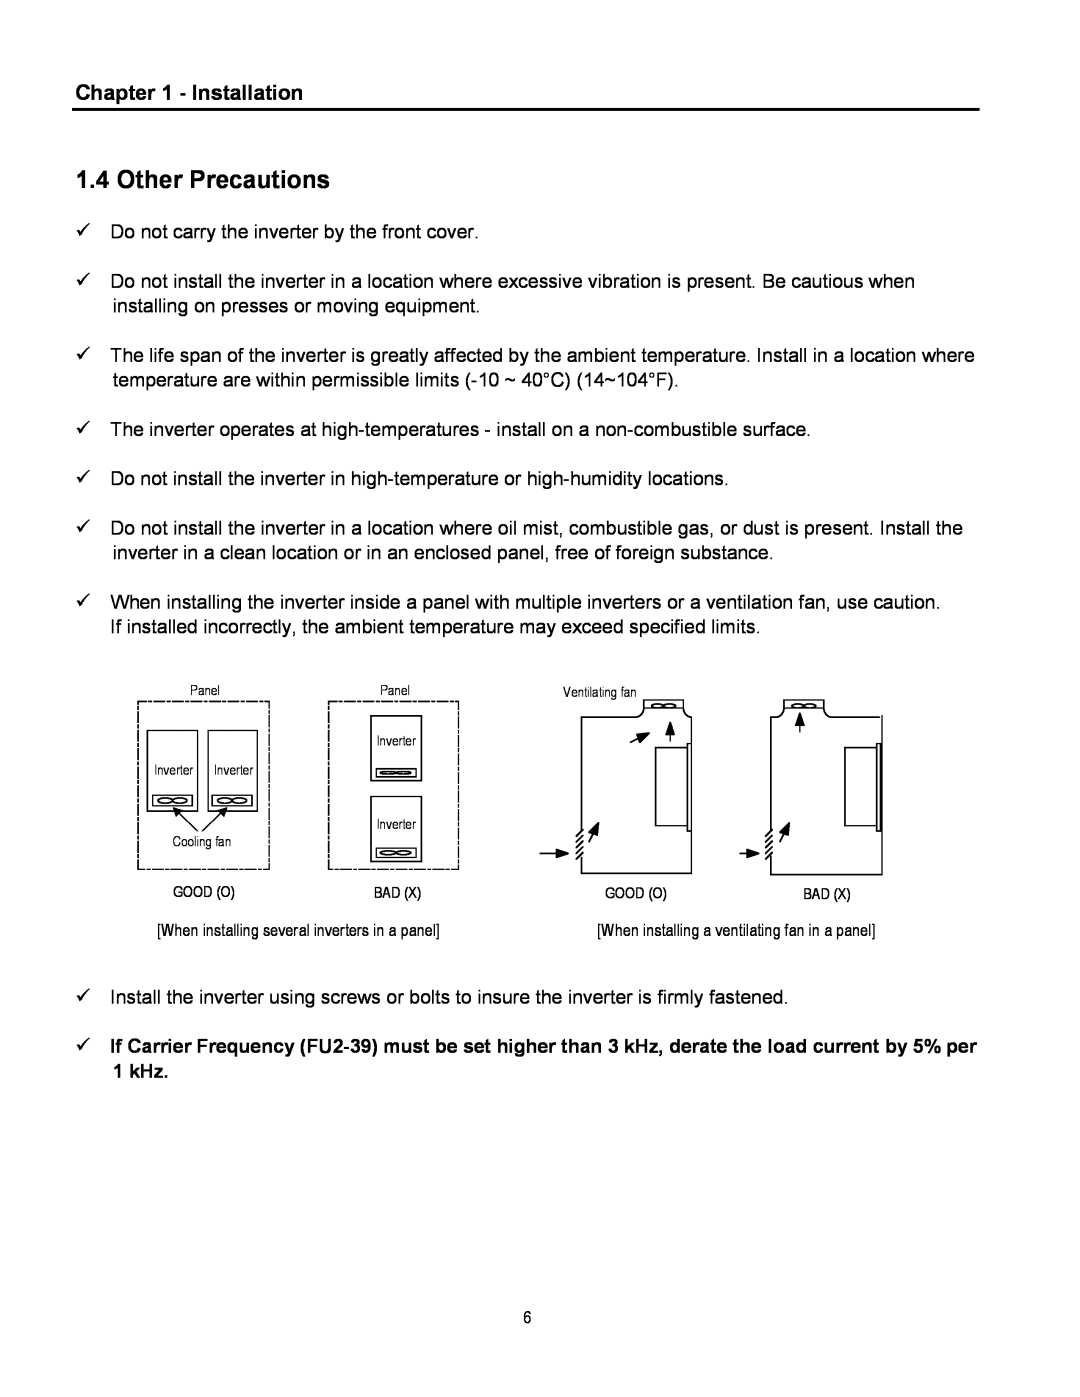 Cleveland Range inverter manual Other Precautions, Installation 